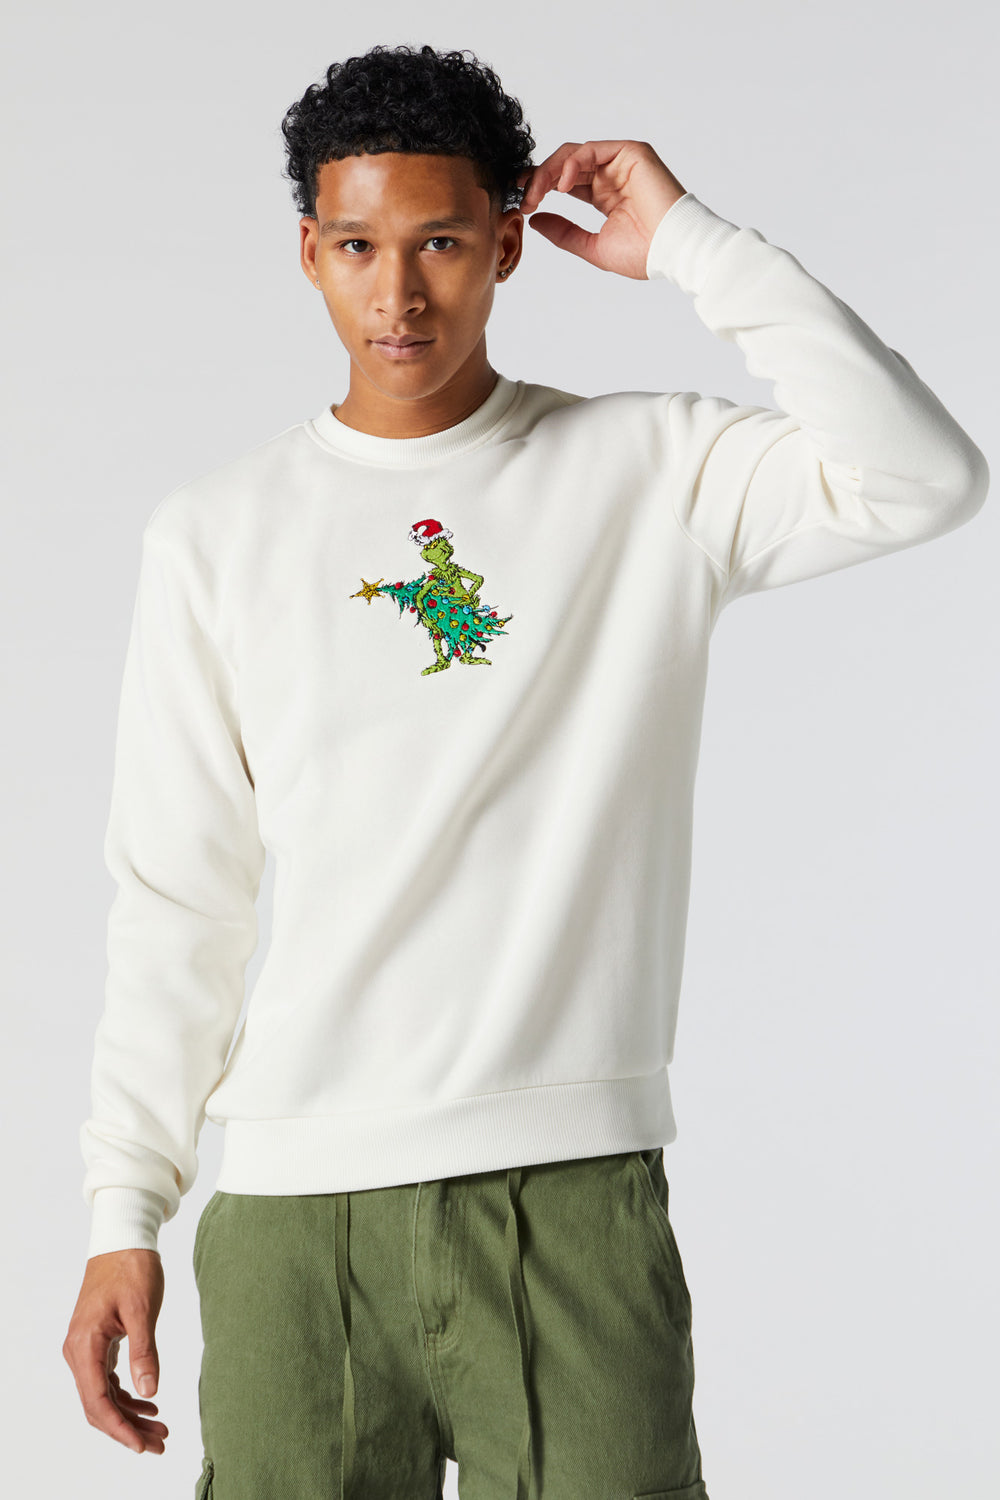 The Grinch Embroidered Fleece Sweatshirt The Grinch Embroidered Fleece Sweatshirt 1